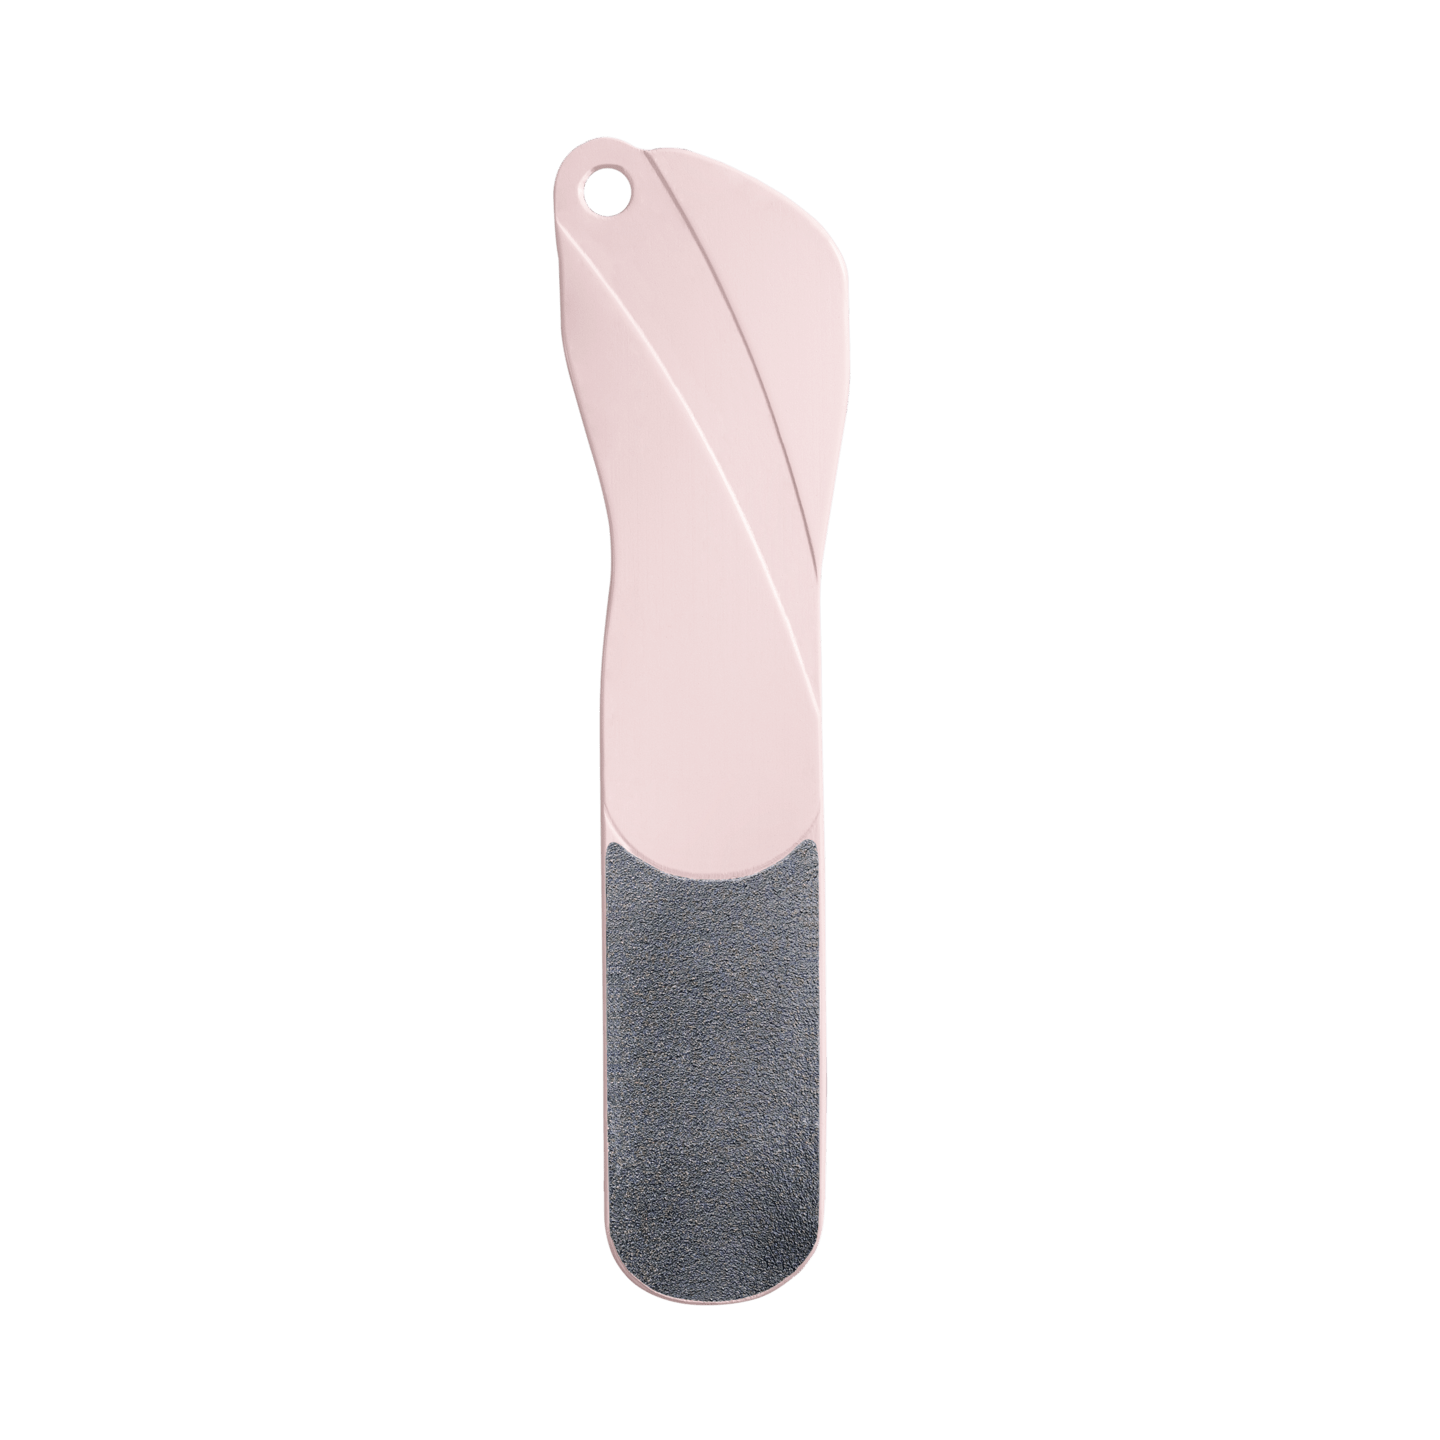 RUCK - Fußfeile, unbedruckt, Kunststoff, 20 cm in pastell rosa